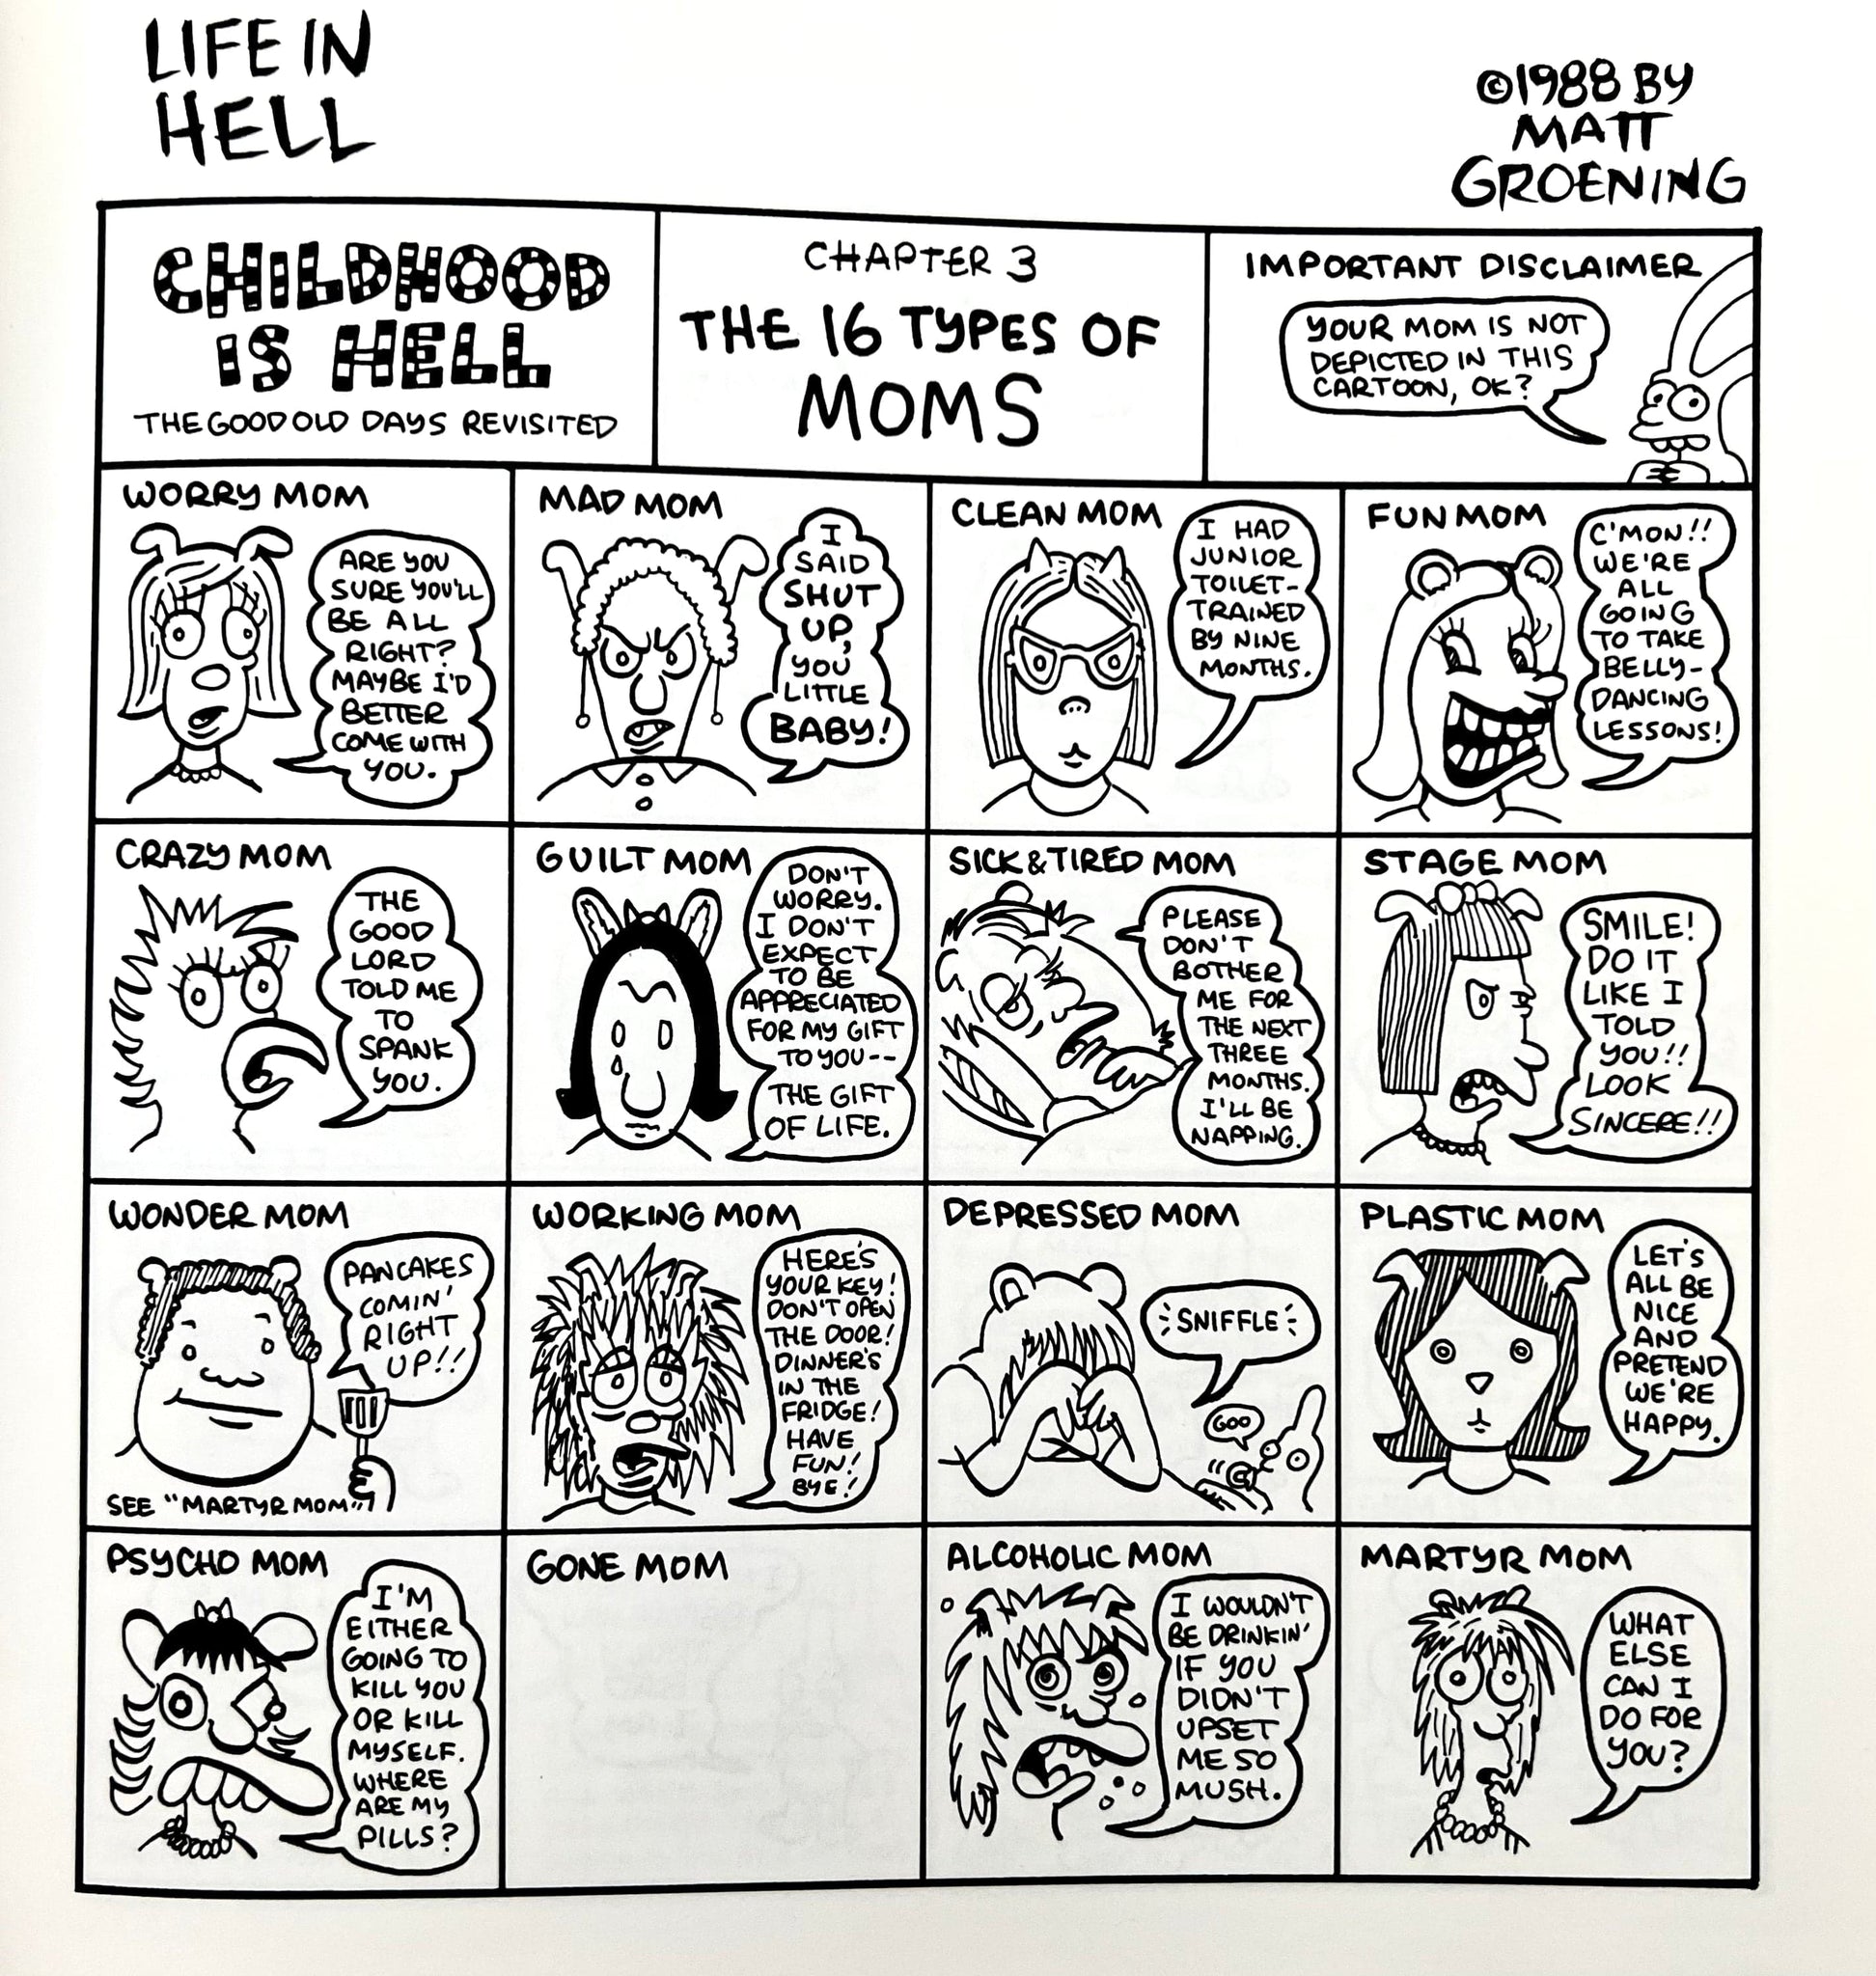 Matt Groening - Childhood is Hell, 1988